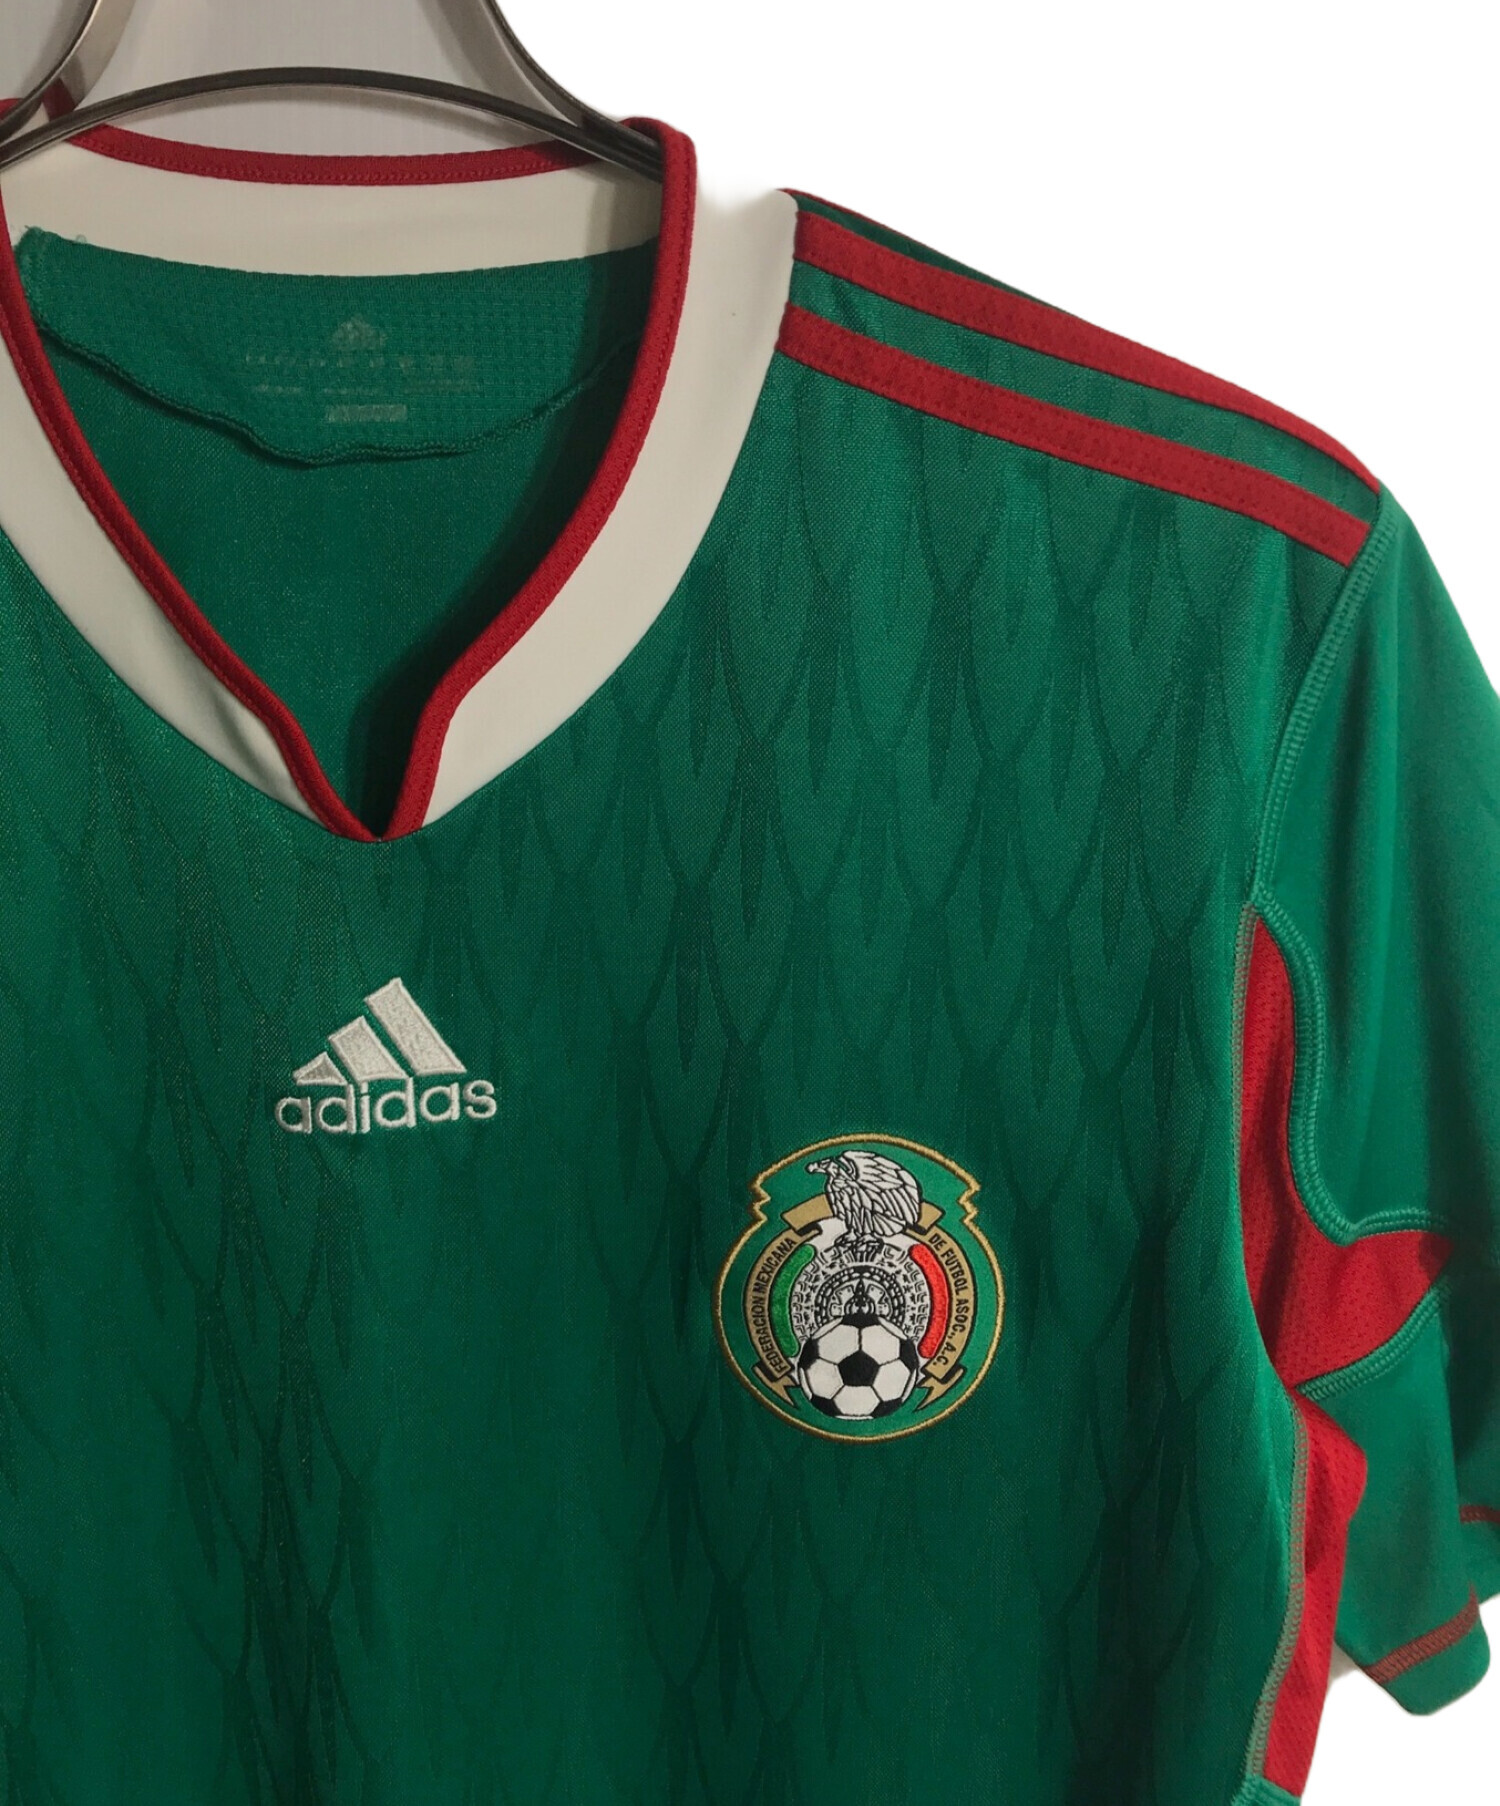 adidas (アディダス) メキシコ代表 2010 ホームレプリカ半袖ジャージー/ゲームシャツ グリーン サイズ:L